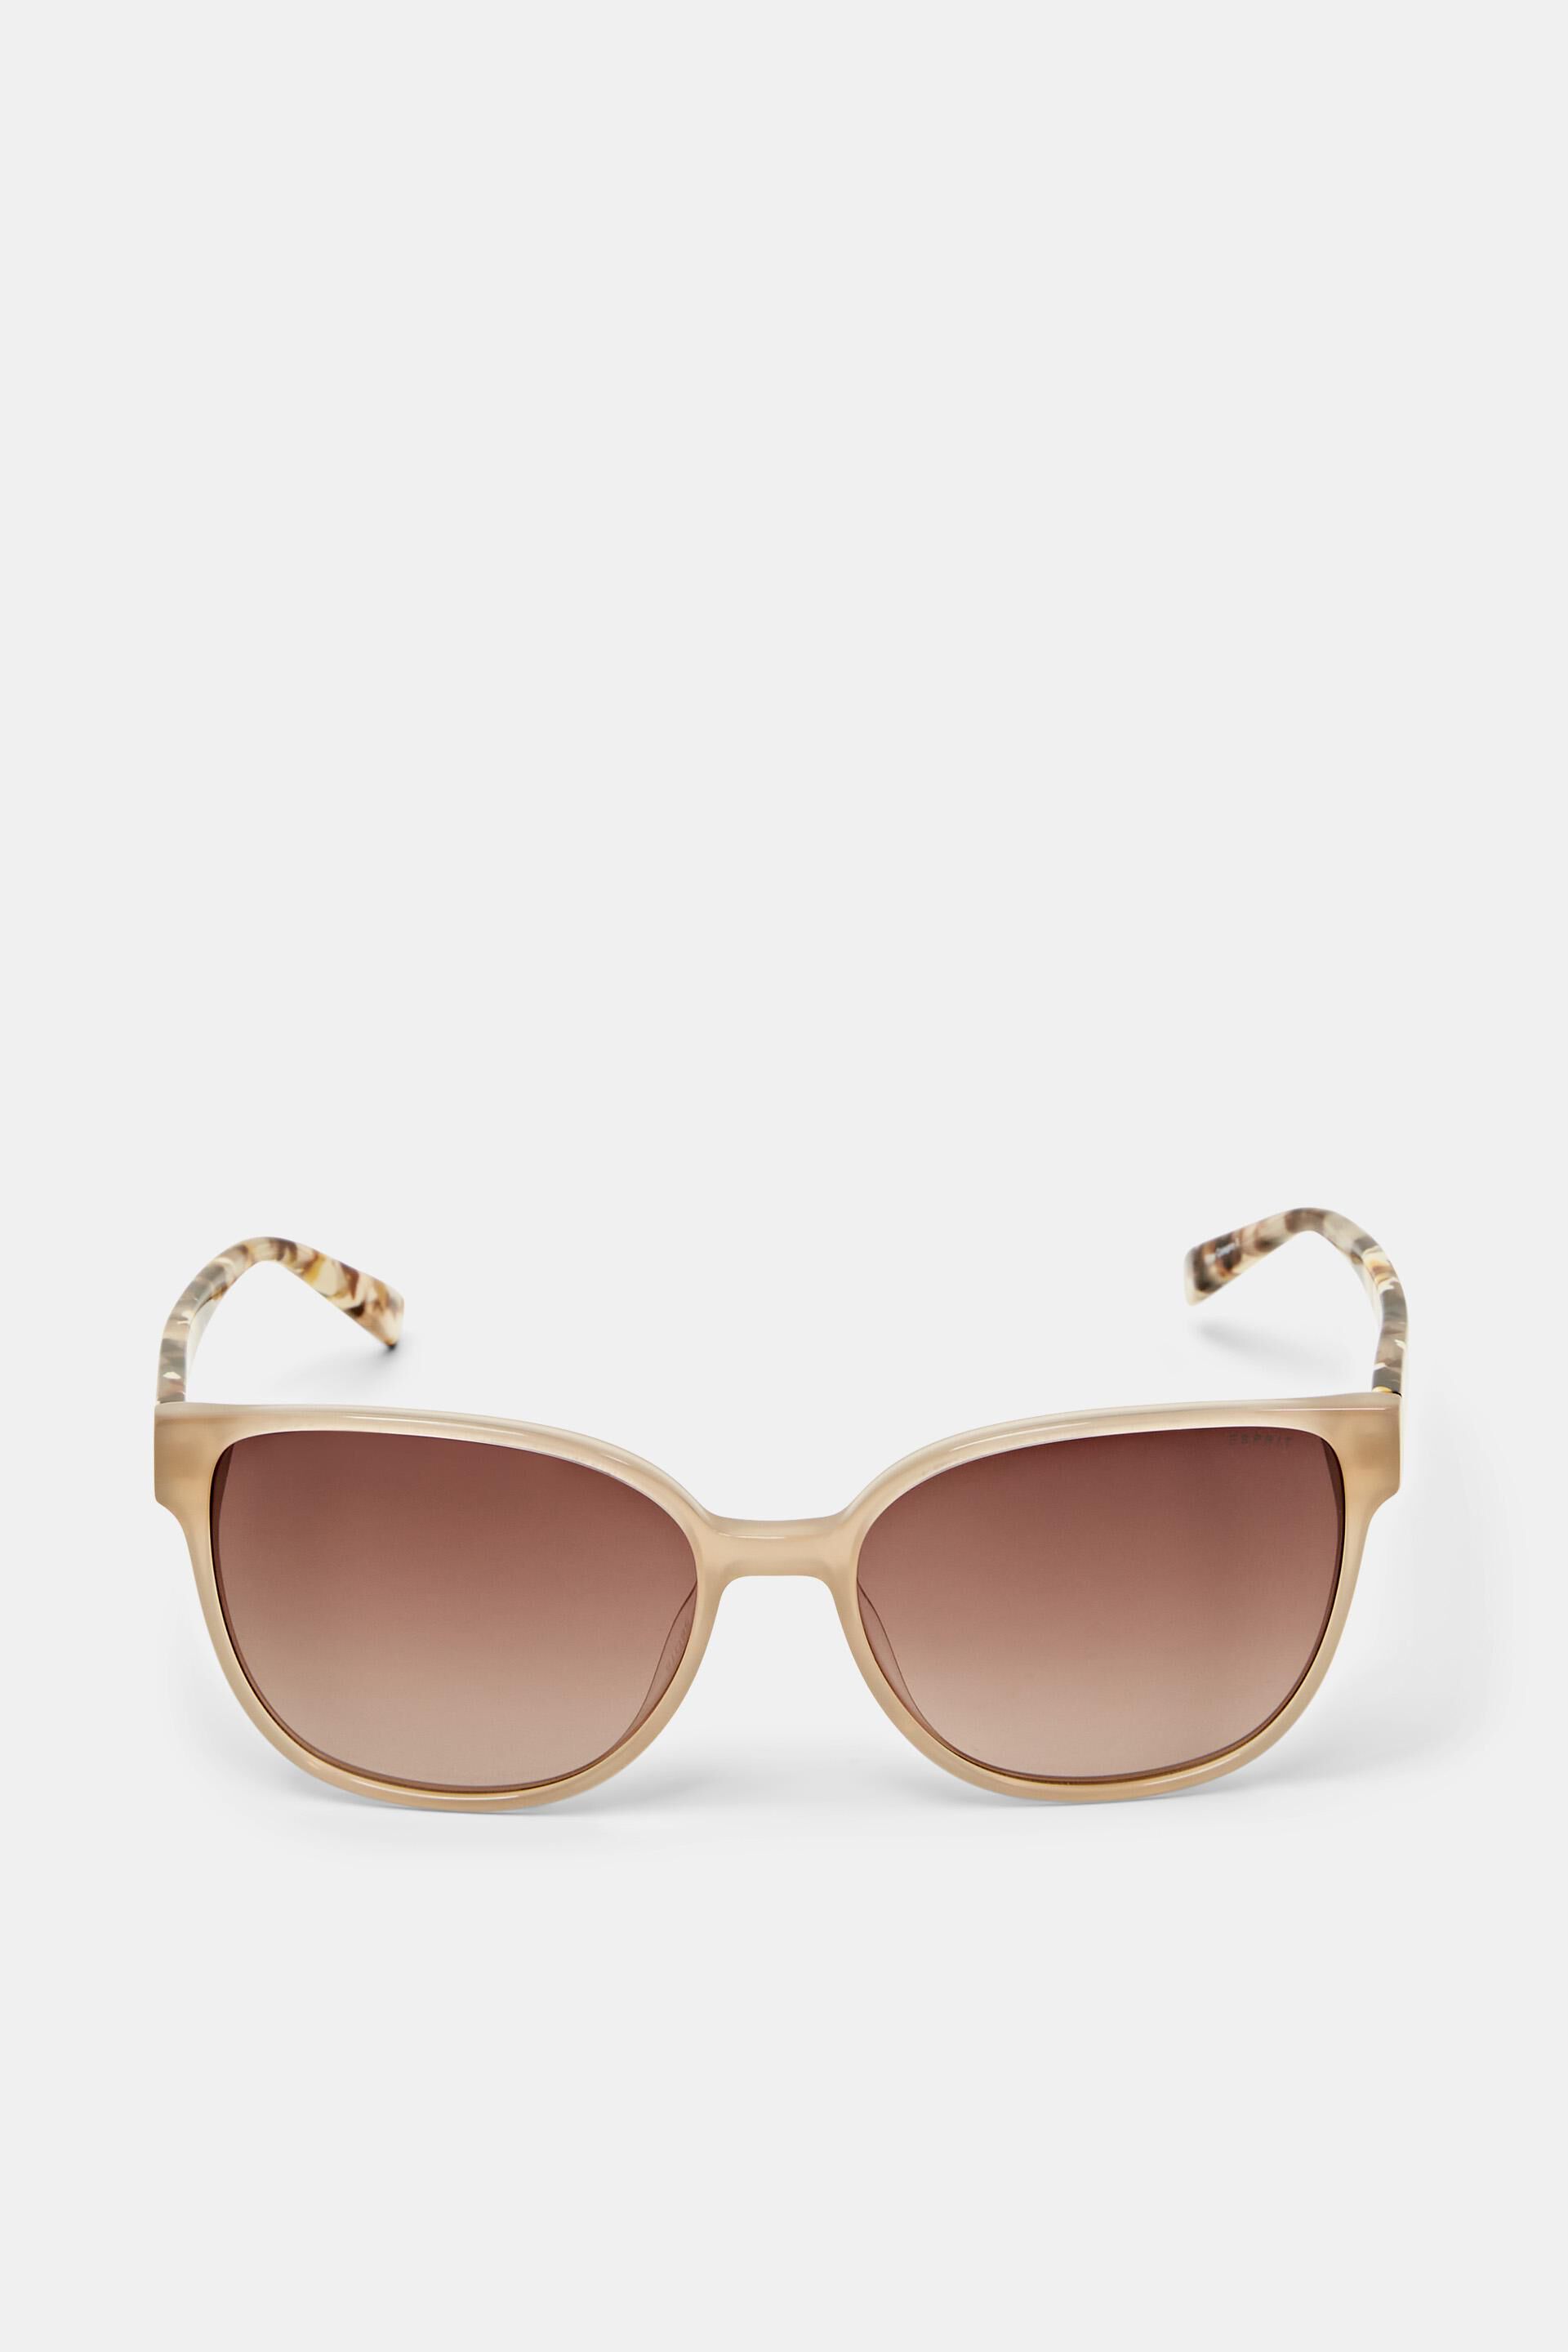 Esprit Square sunglasses framed